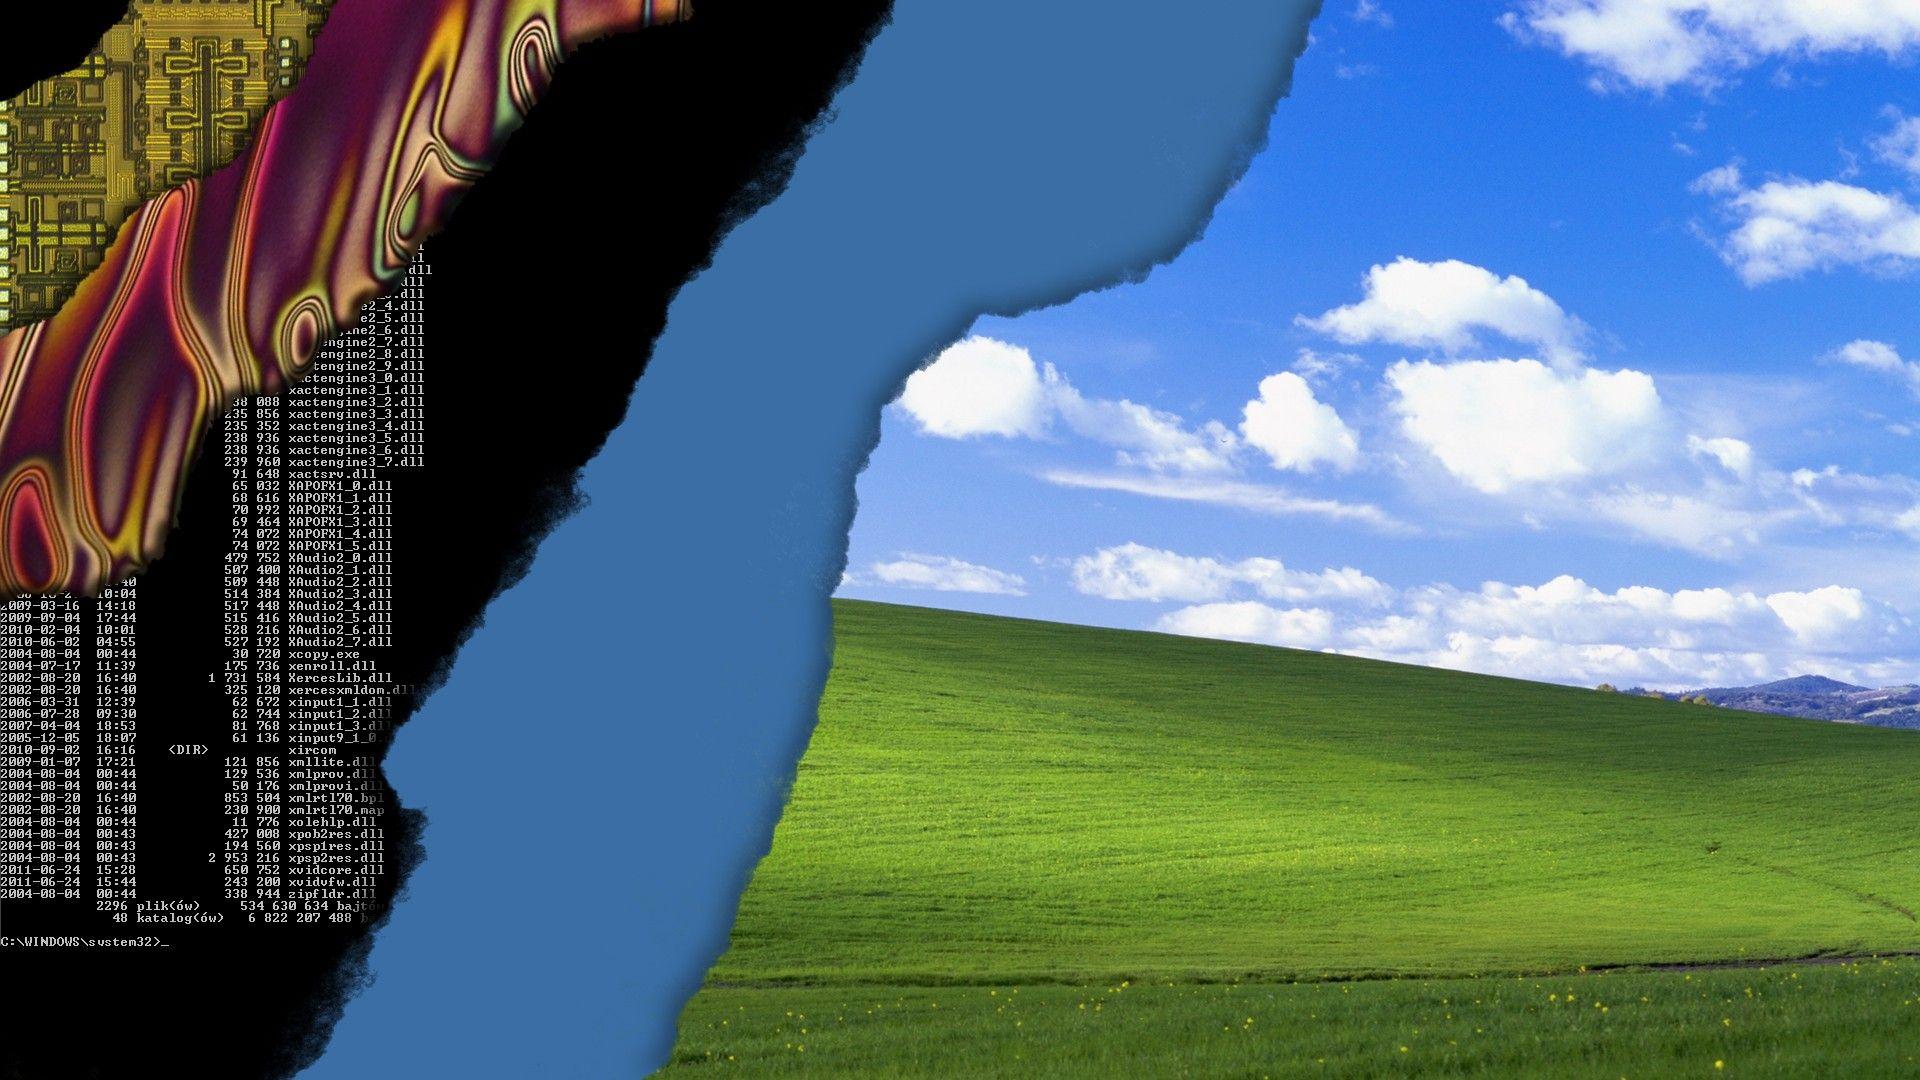 Windows Xp Wallpaper Hd For Desktop